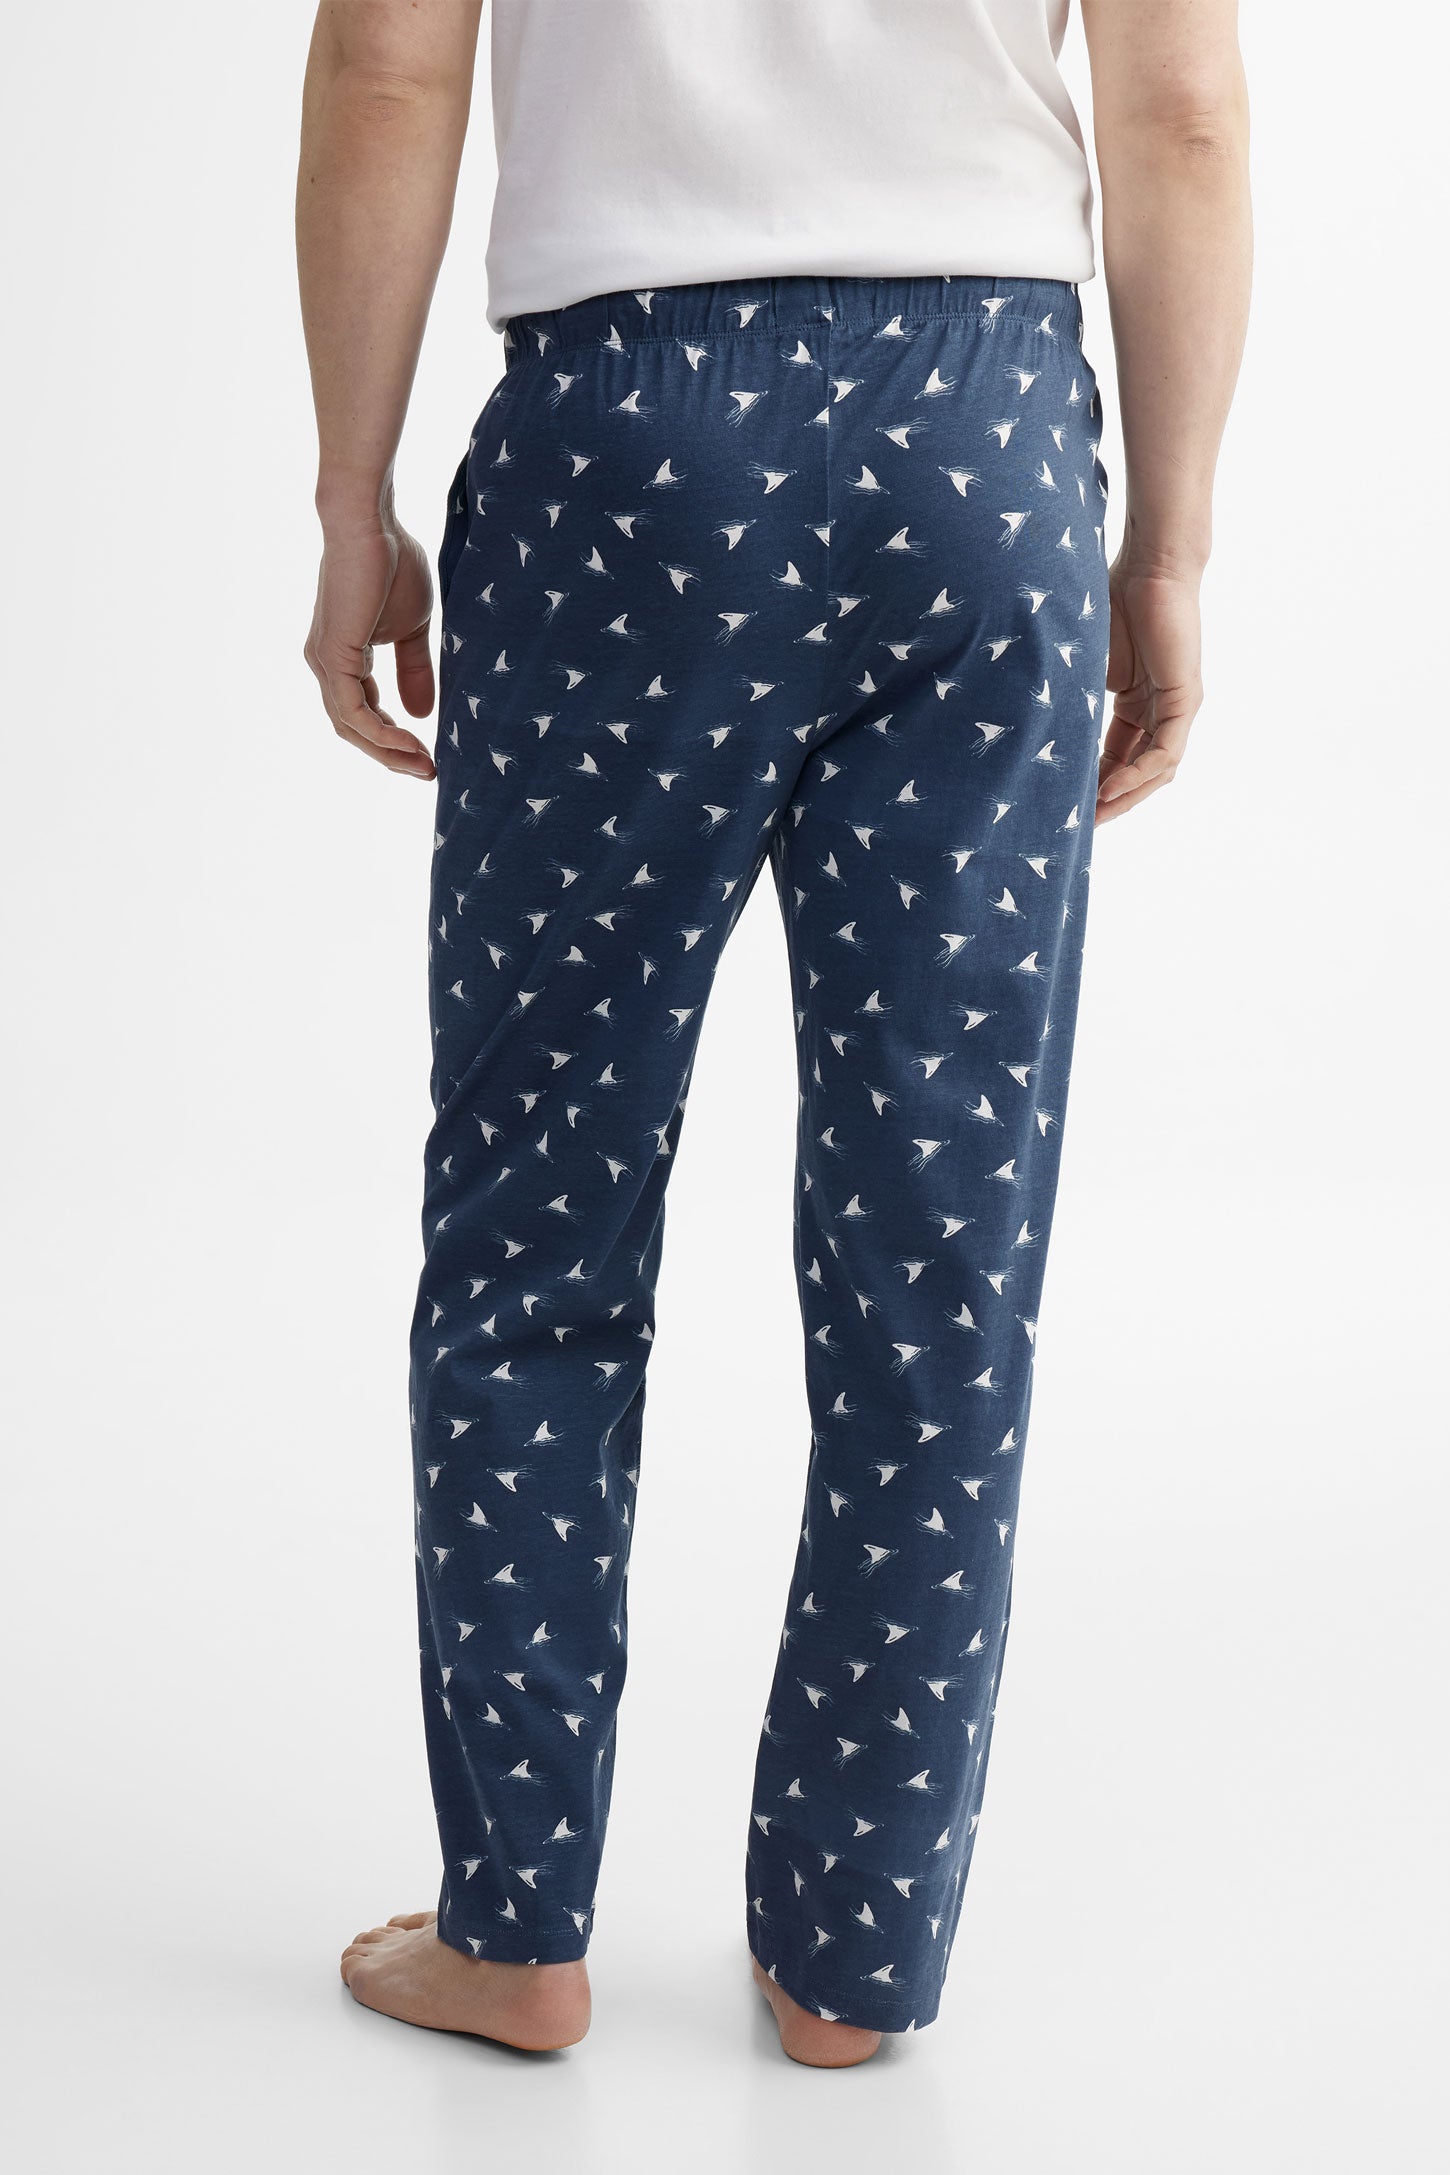 Pantalon pyjama en coton, 2/40$ - Homme && BLEU MULTI